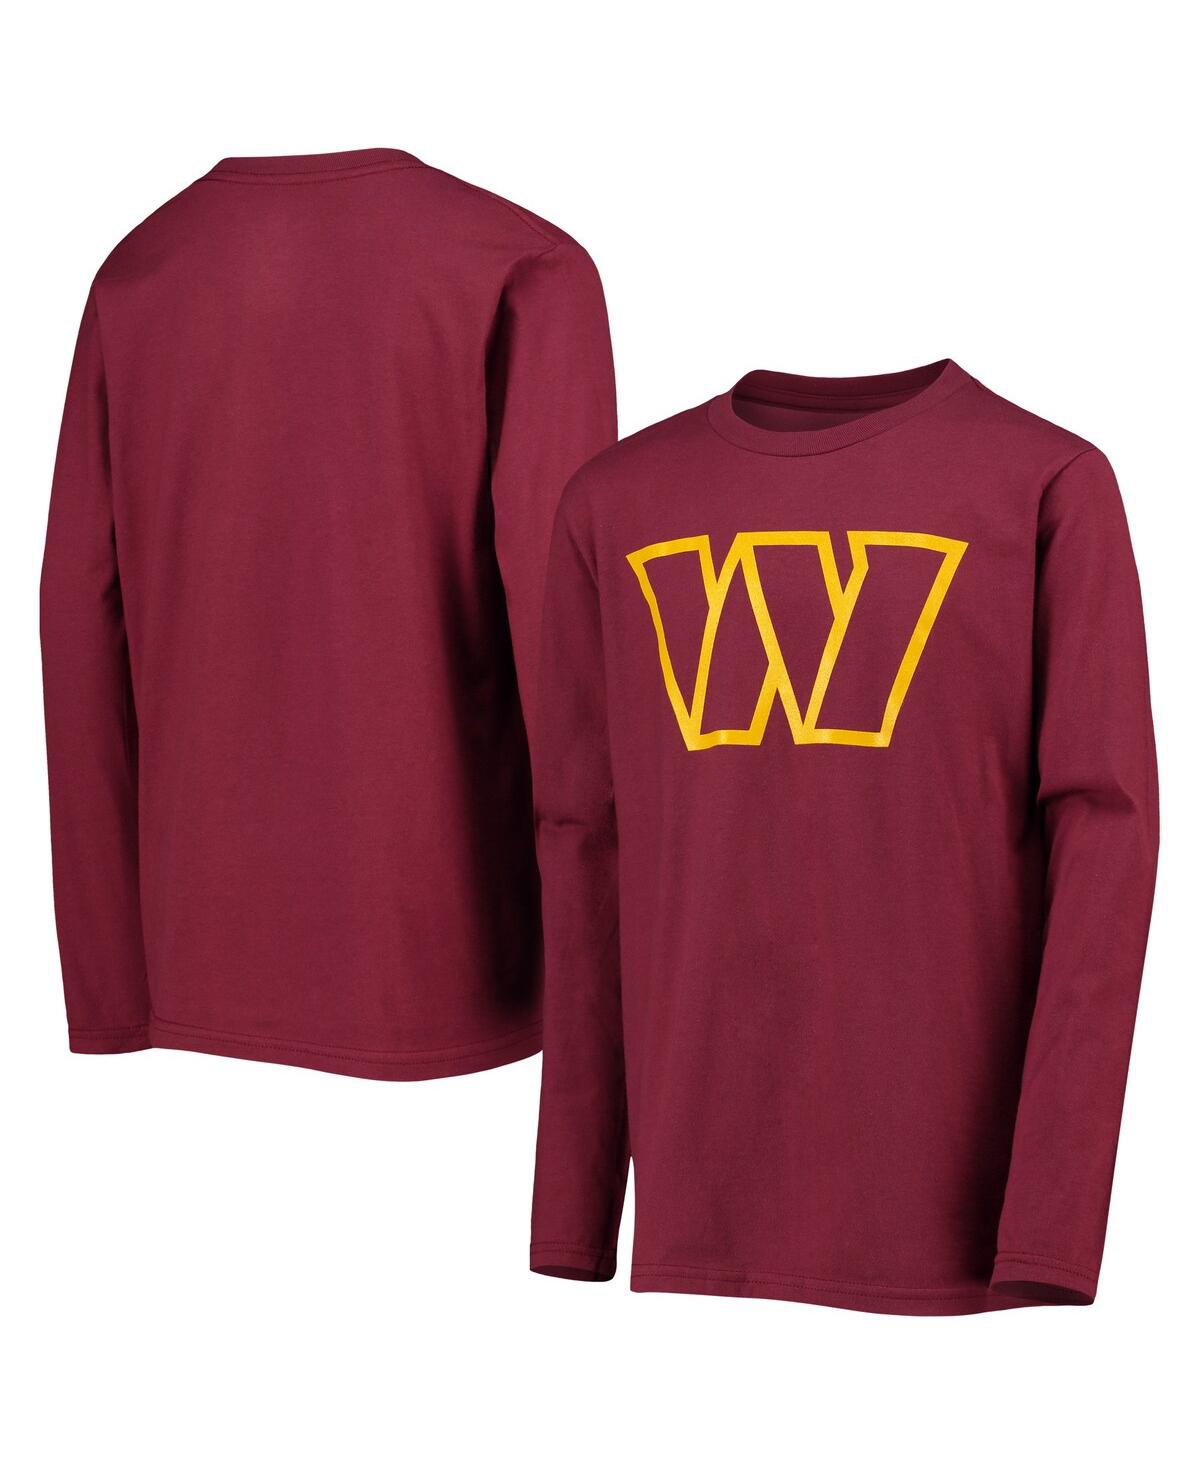 Outerstuff Kids' Big Boys Burgundy Washington Commanders Primary Team Logo Long Sleeve T-shirt